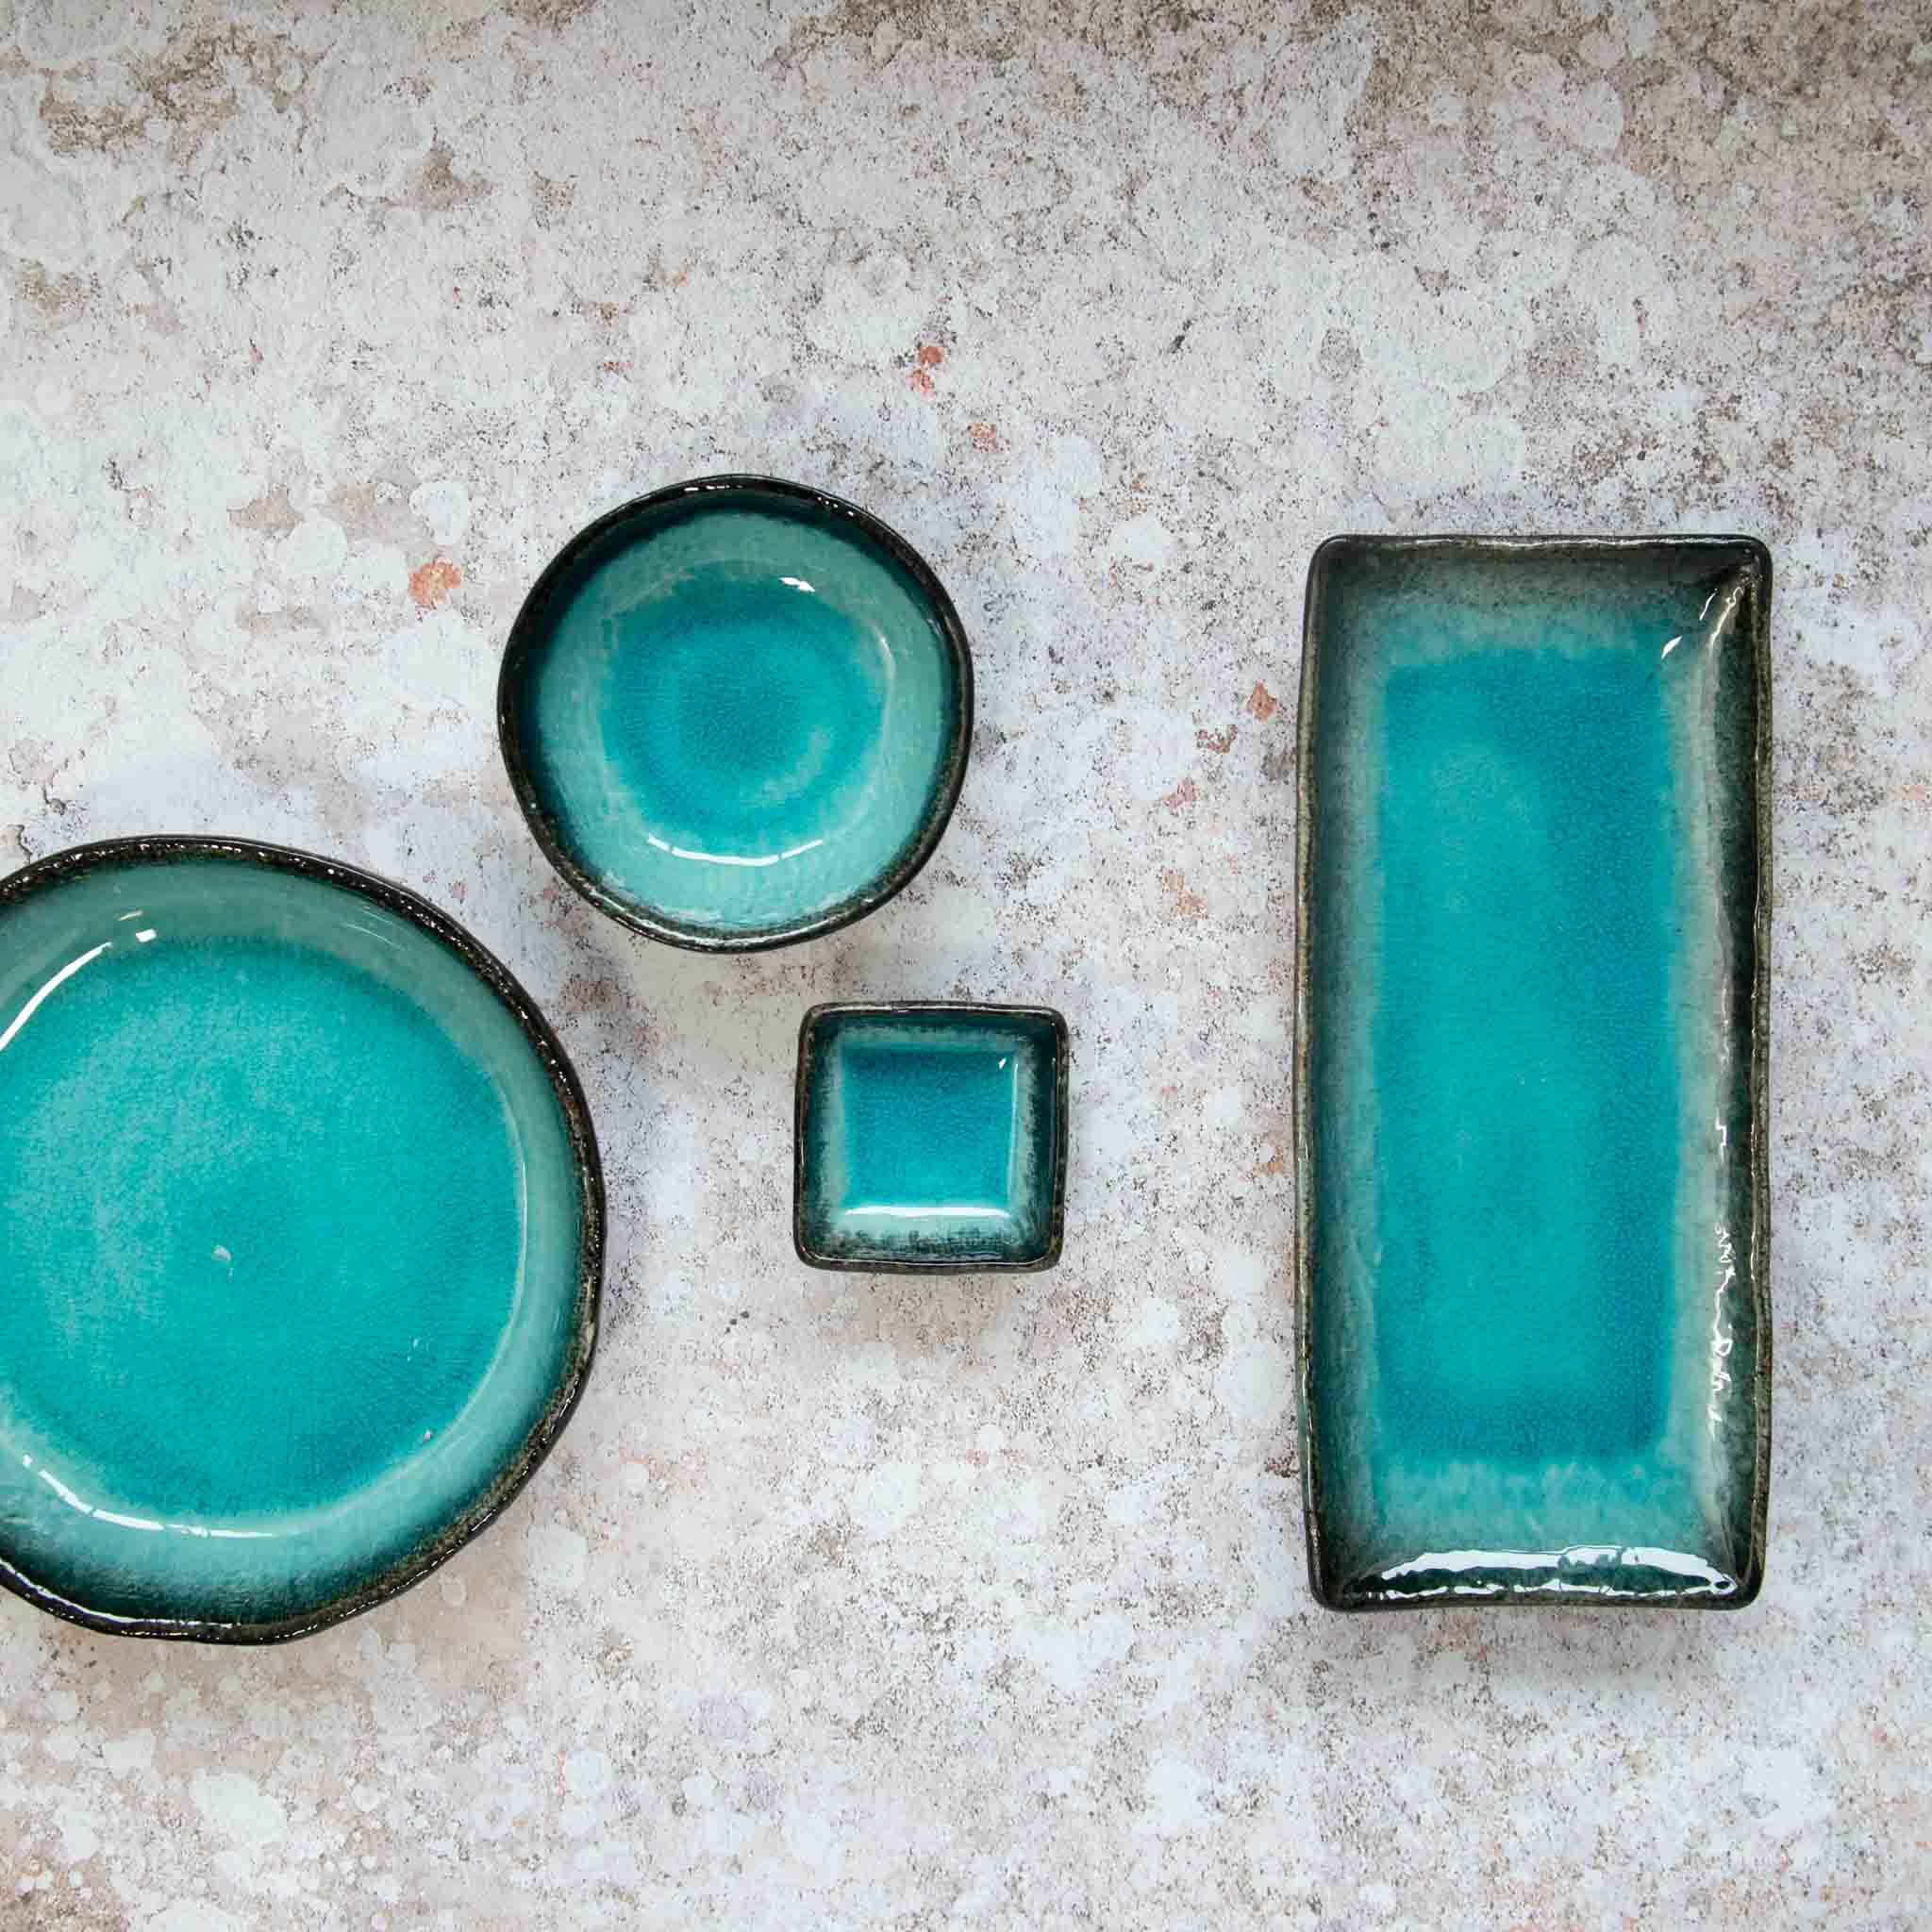 Kiji Stoneware & Ceramics Oblong Turquoise Platter Tableware Japanese Tableware Japanese Food